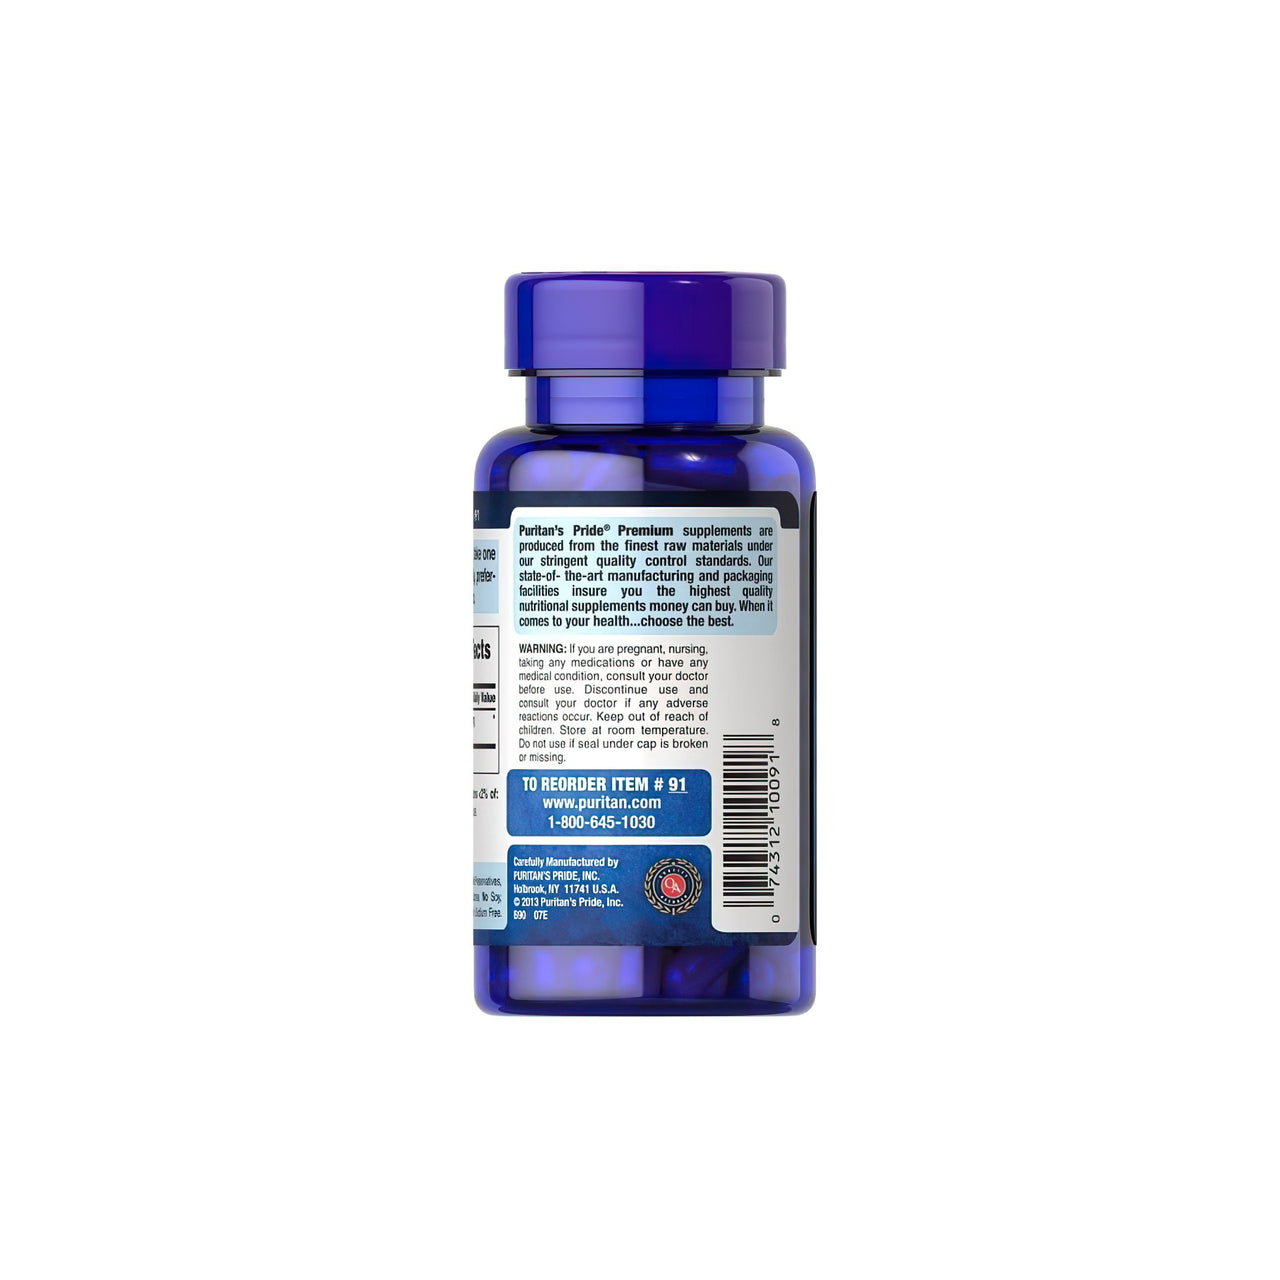 L-arginine 500 mg free form 100 capsules - back